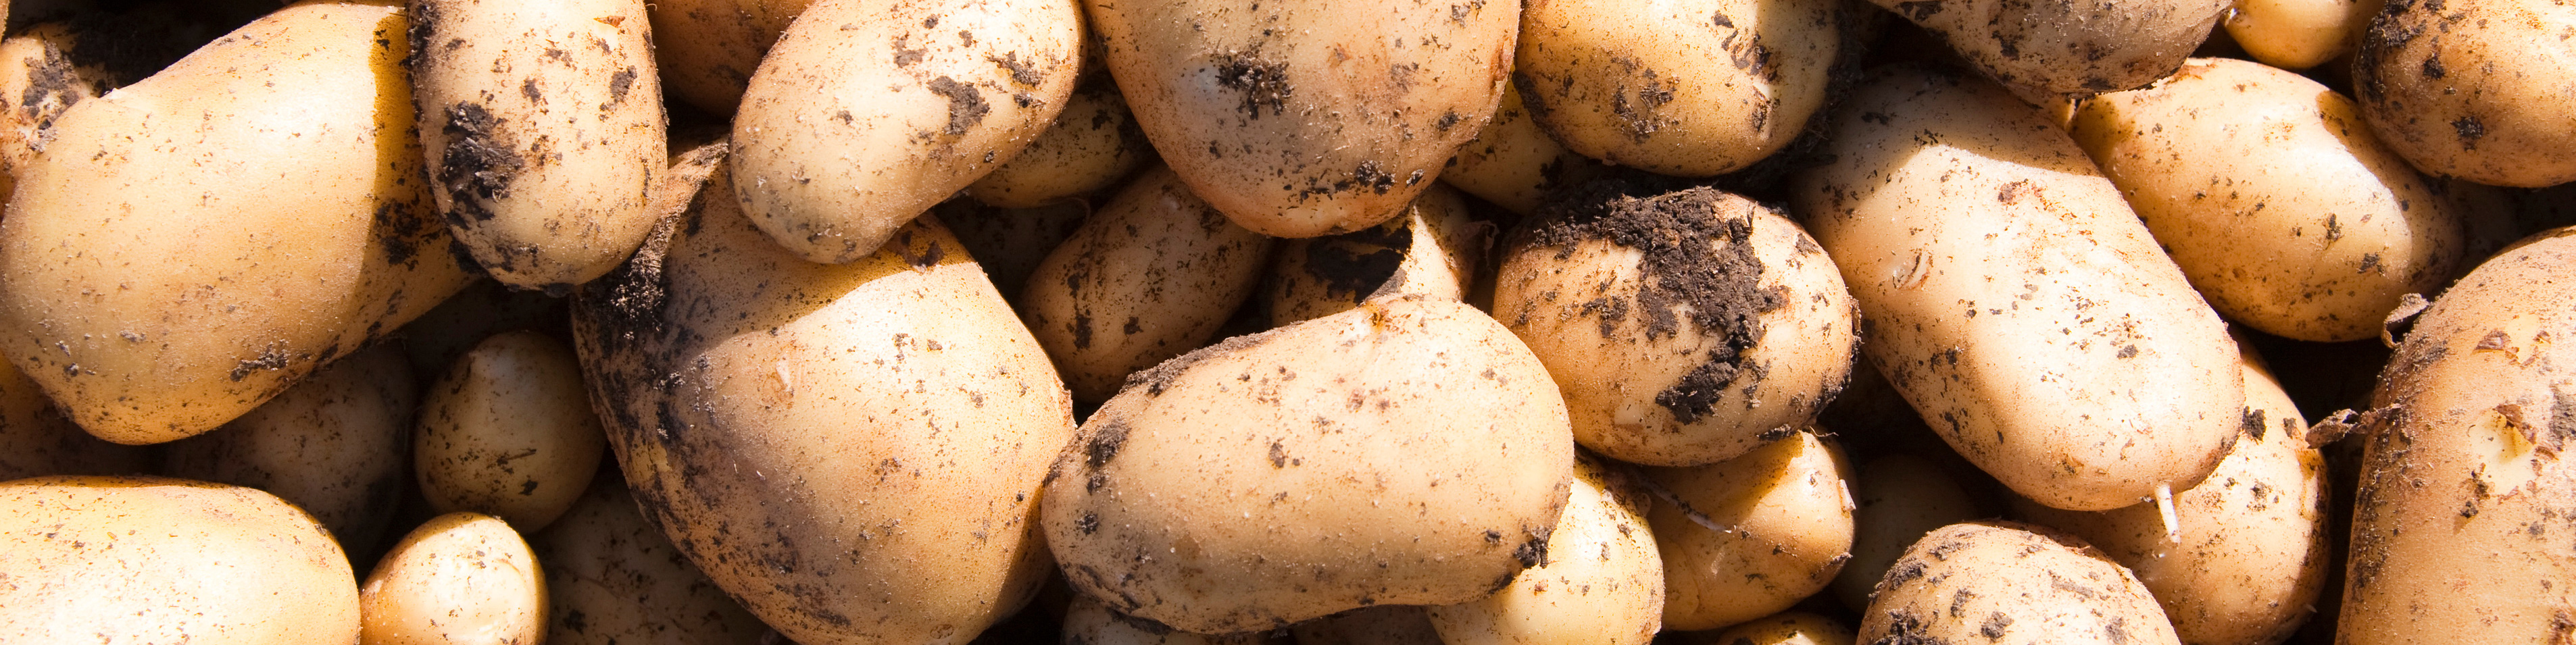 a bushel of potatoes